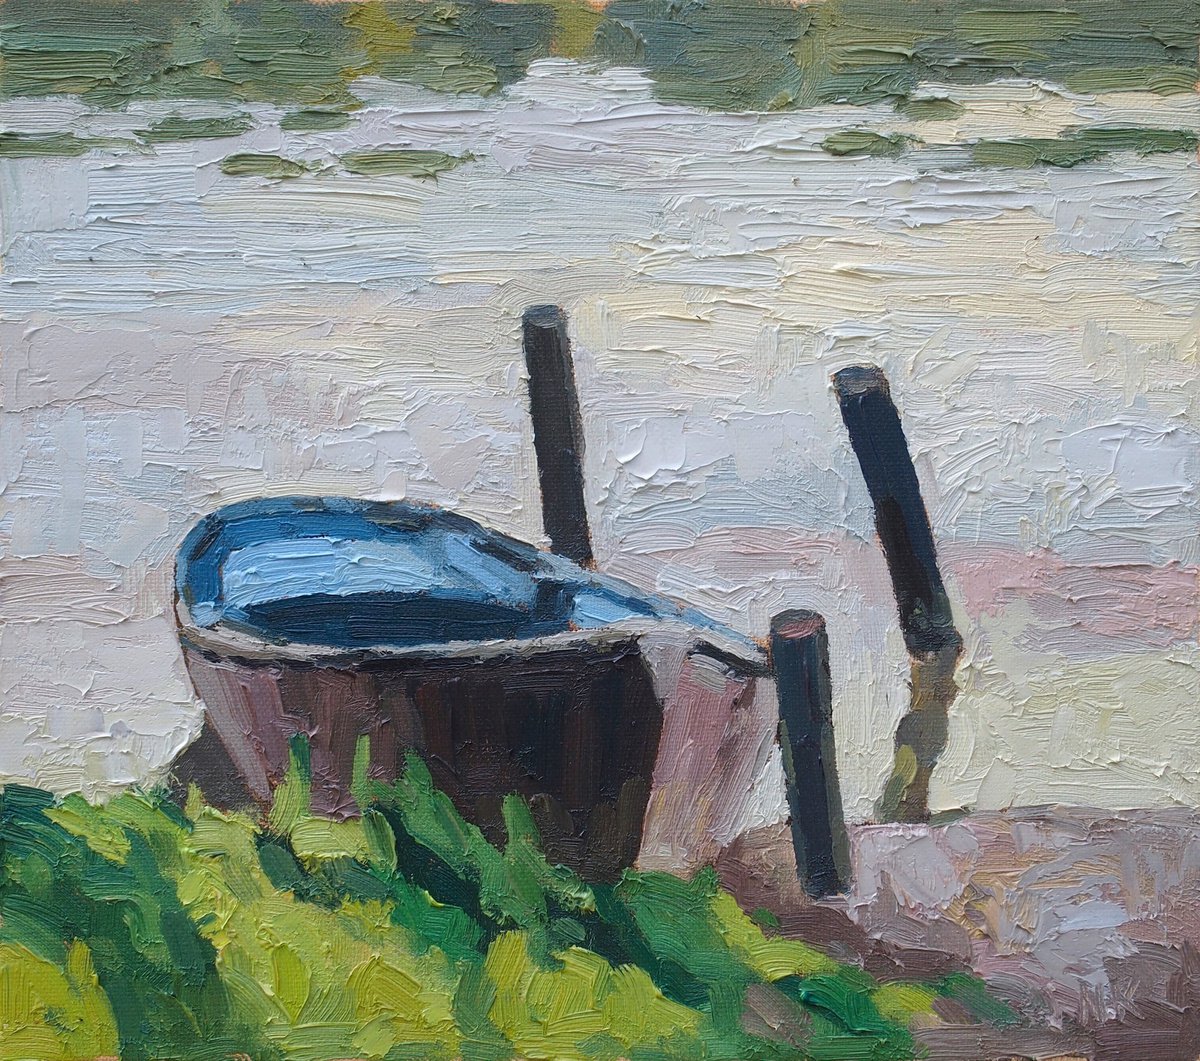 lonely boat by Nikolai Kraneis